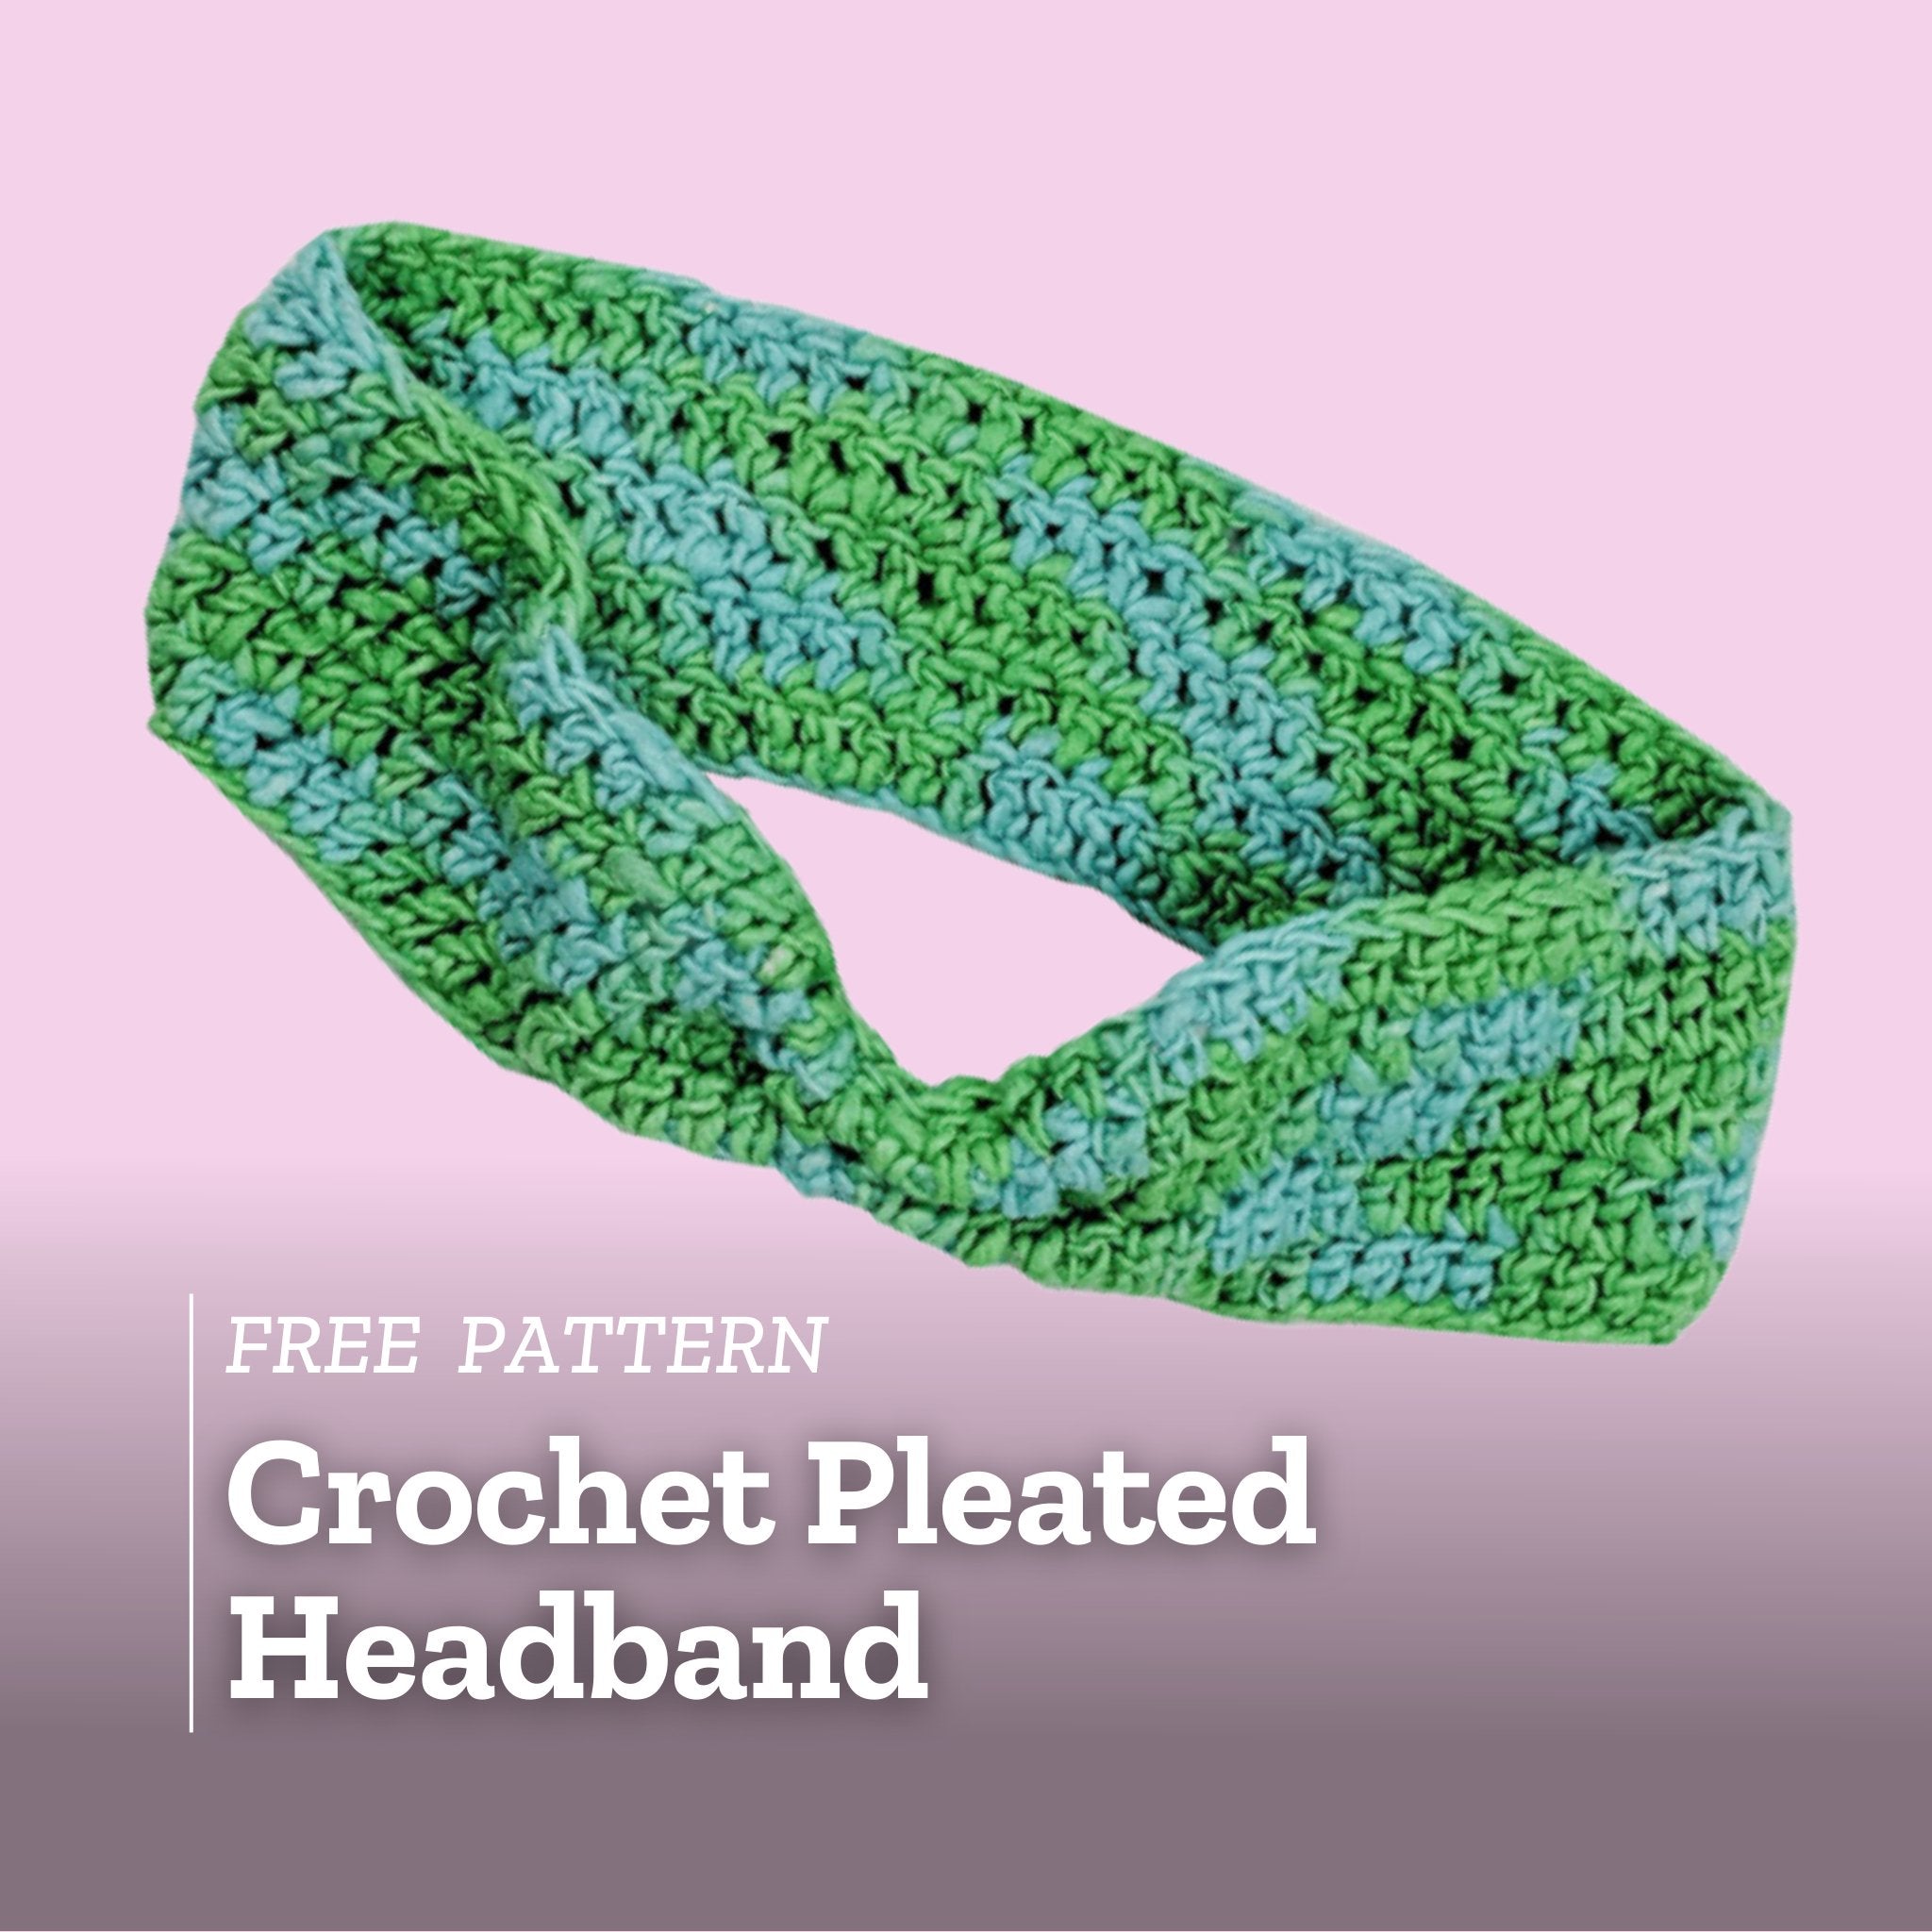 Free Pattern: Crochet Pleated Headband - Darn Good Yarn